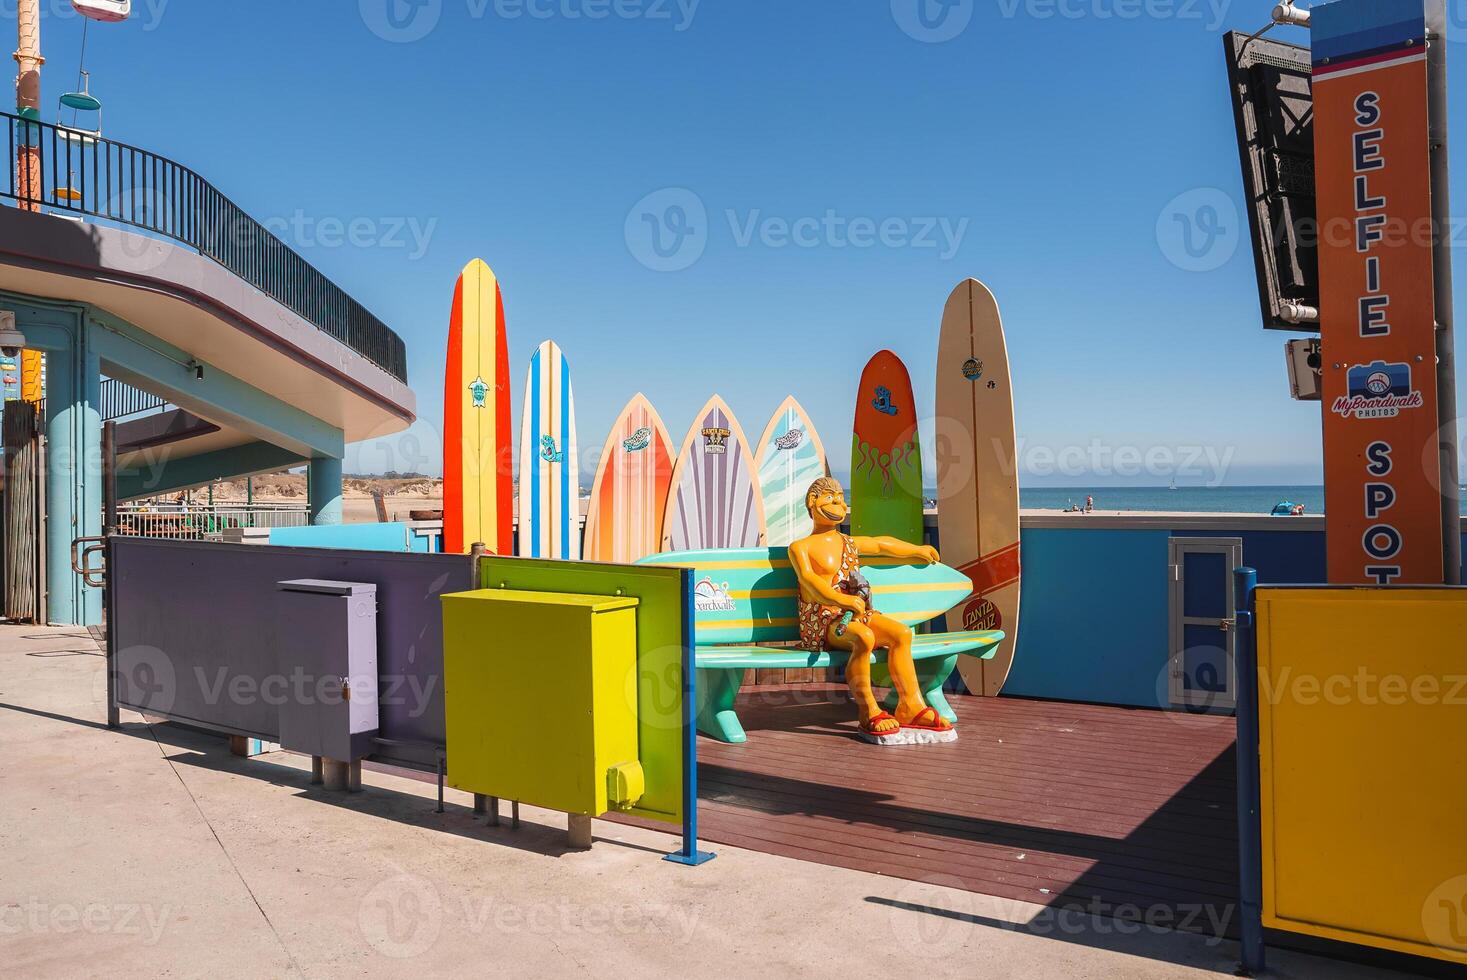 Vibrant Surf Culture Scene with Divrse Surfboard Display on Beach Boardwalk photo